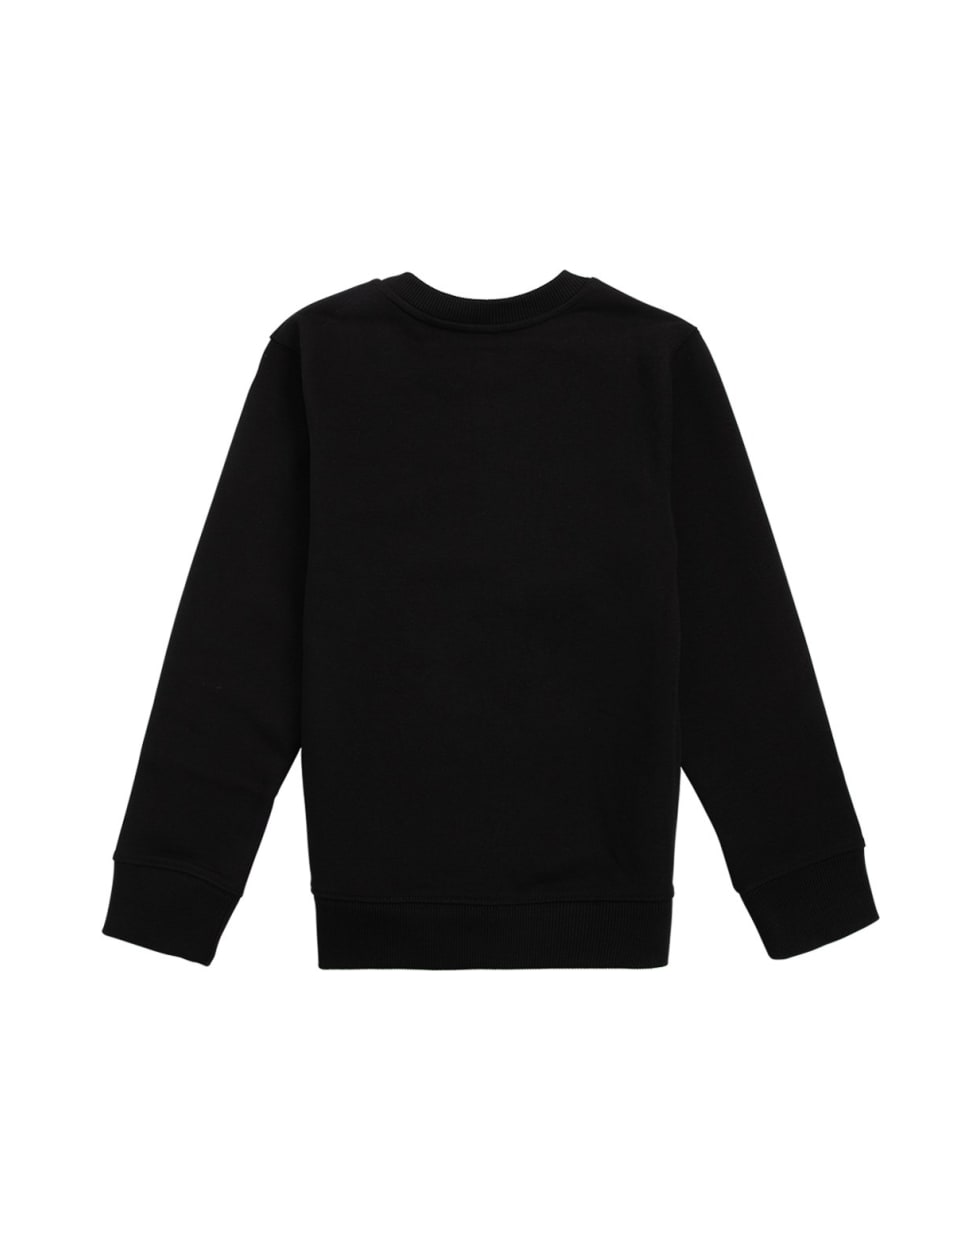 Givenchy Black Cotton Sweatshirt With Print - Black